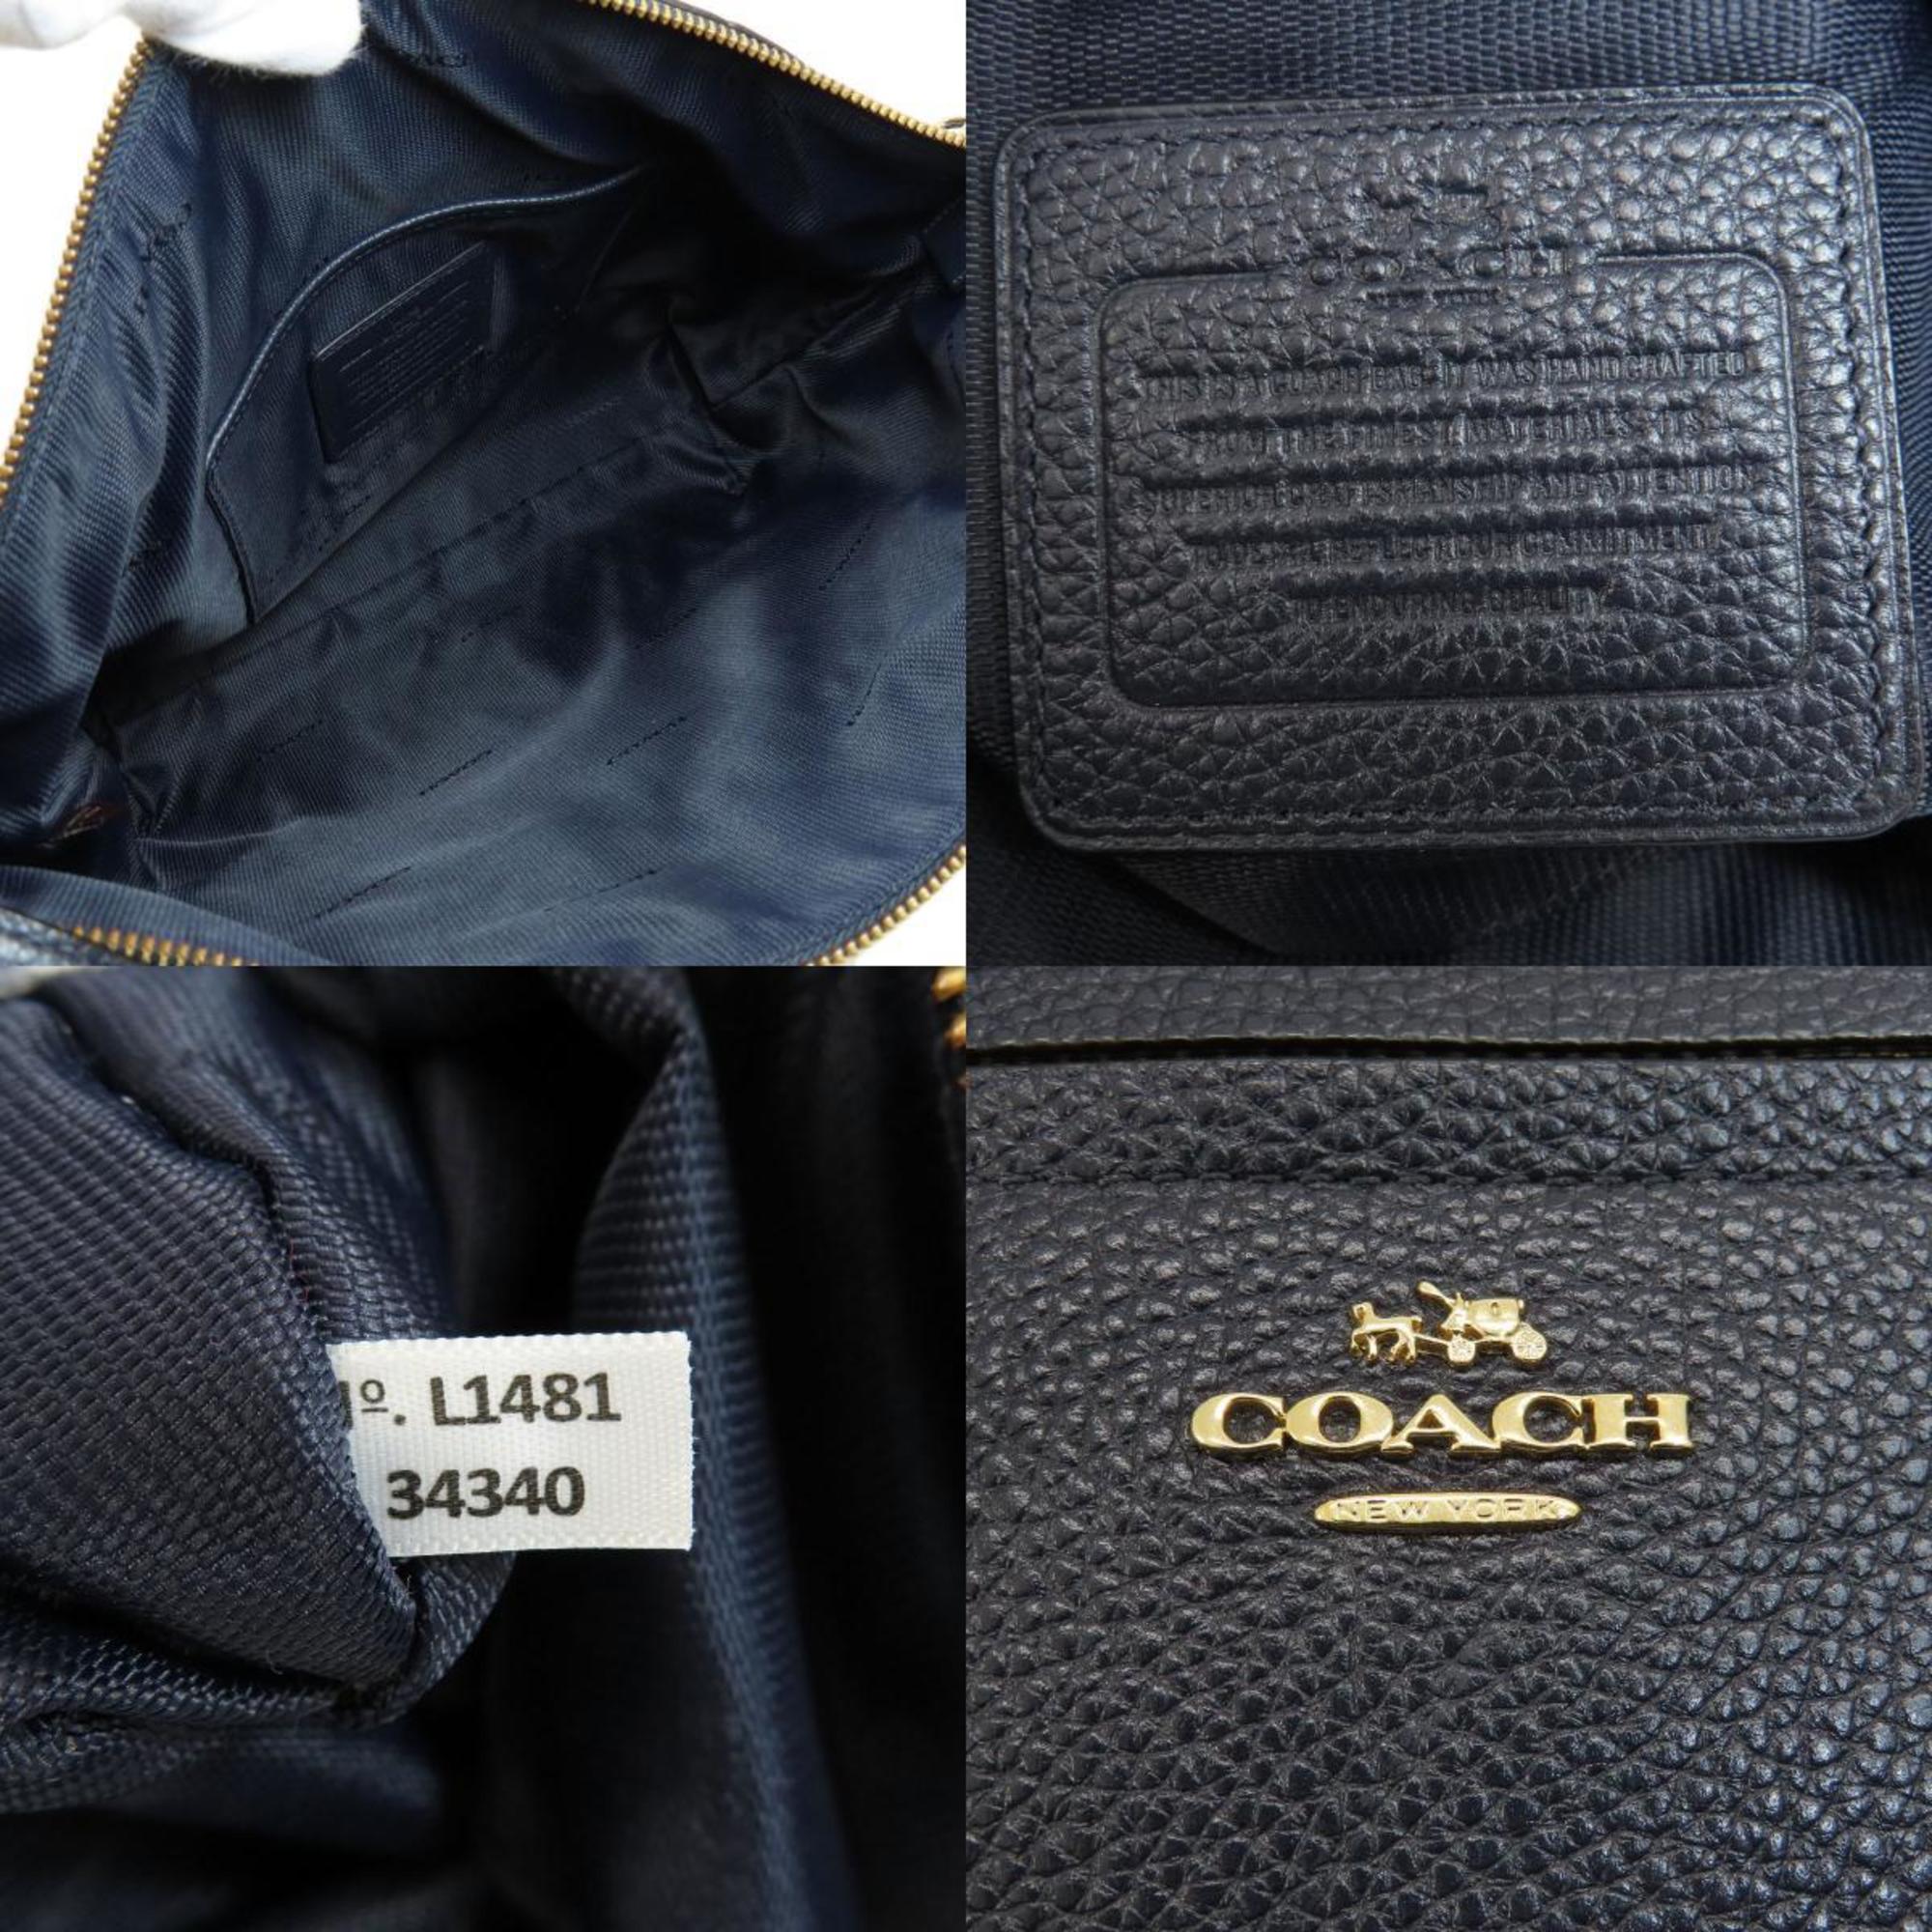 Coach 34340 handbag leather ladies